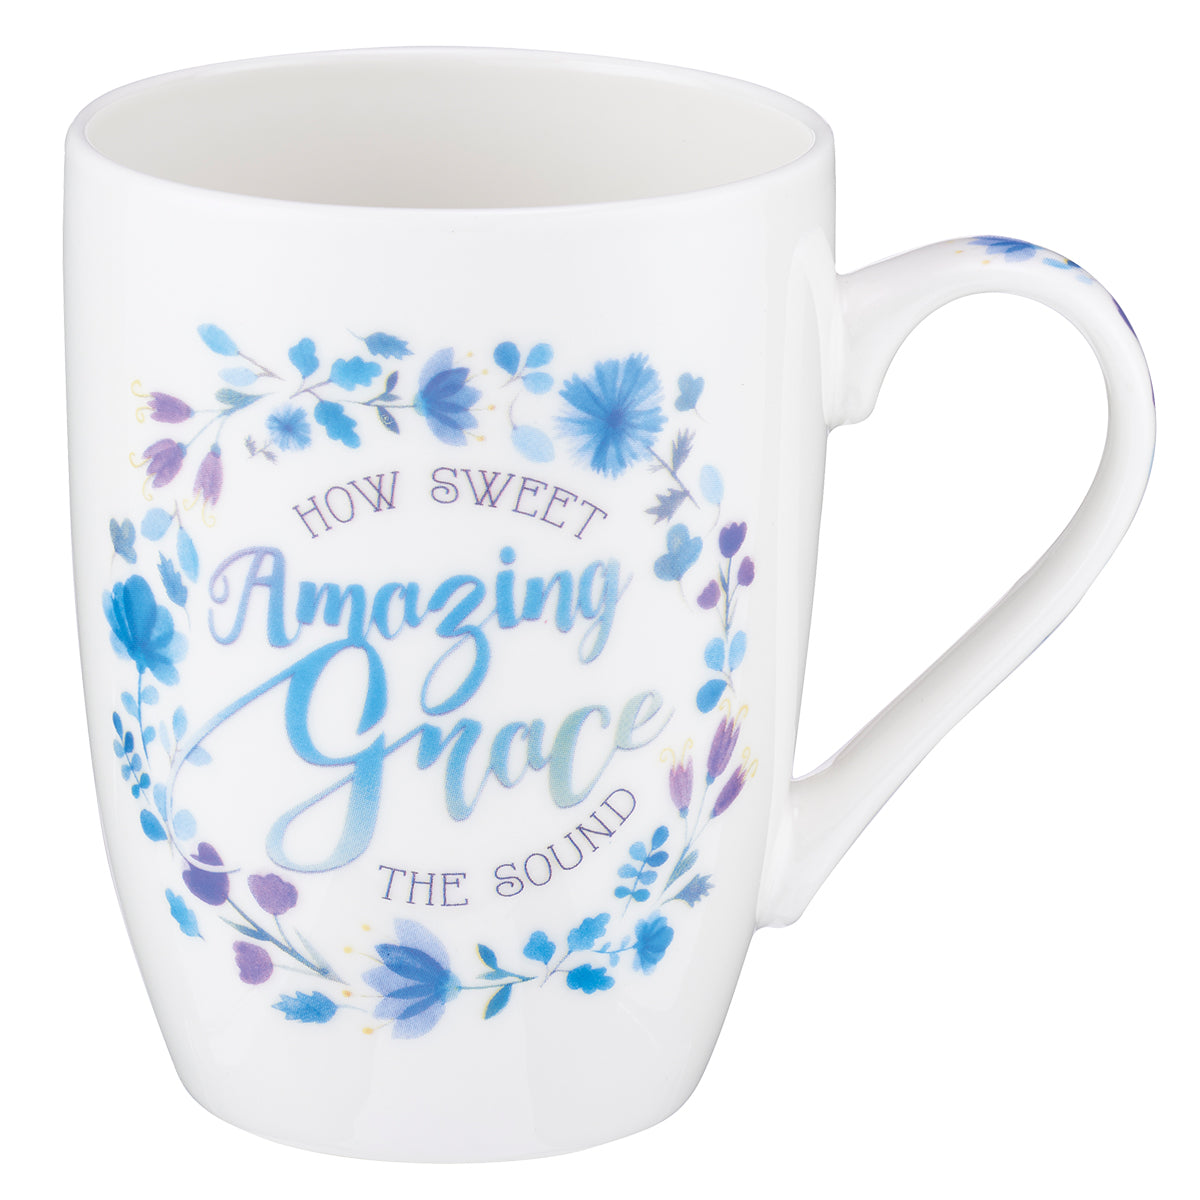 Blue Floral Amazing Grace Coffee Mug